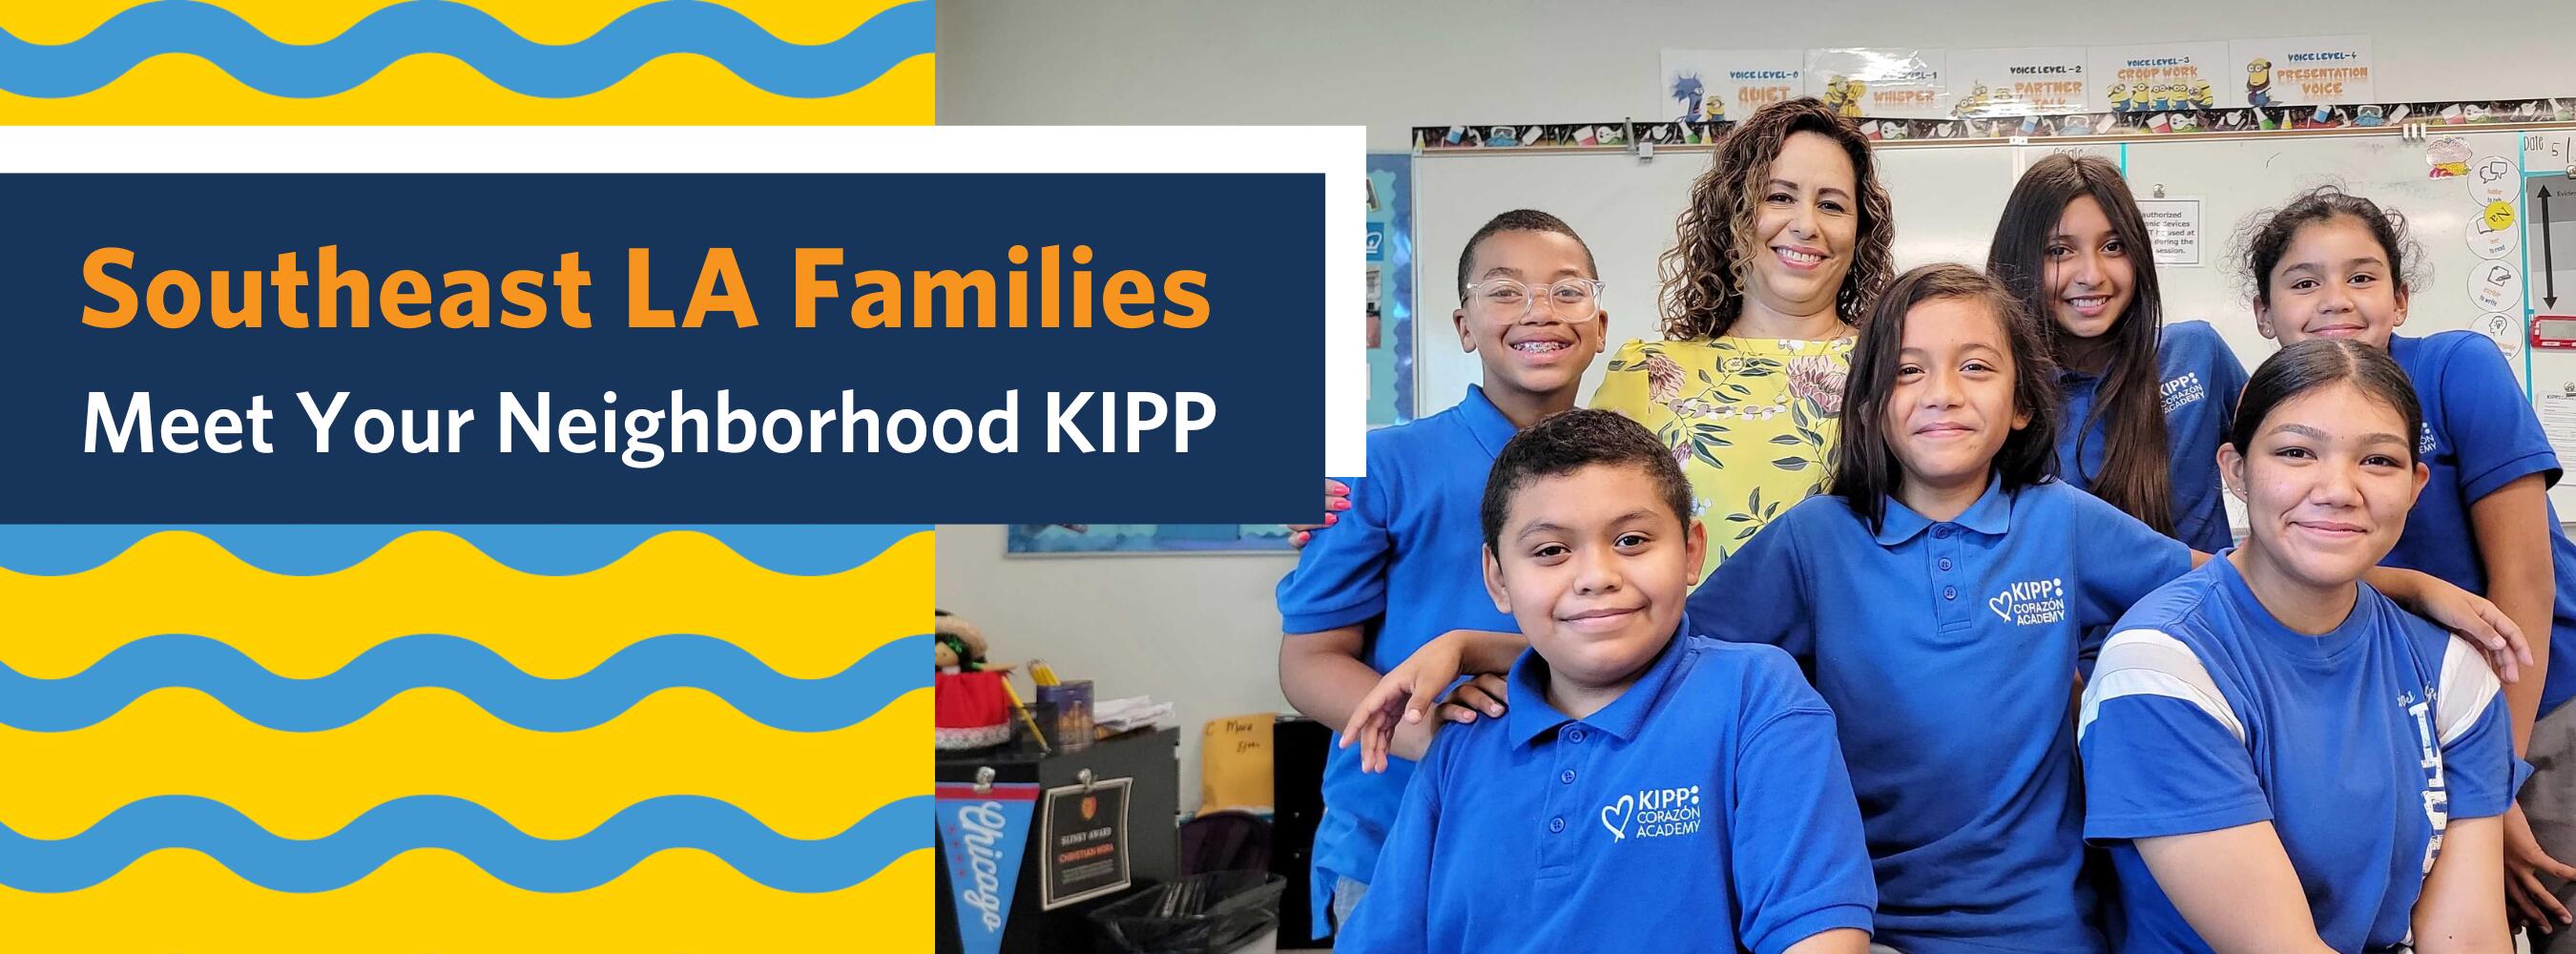 Southeast LA Families: Meet Your Neighborhood KIPP